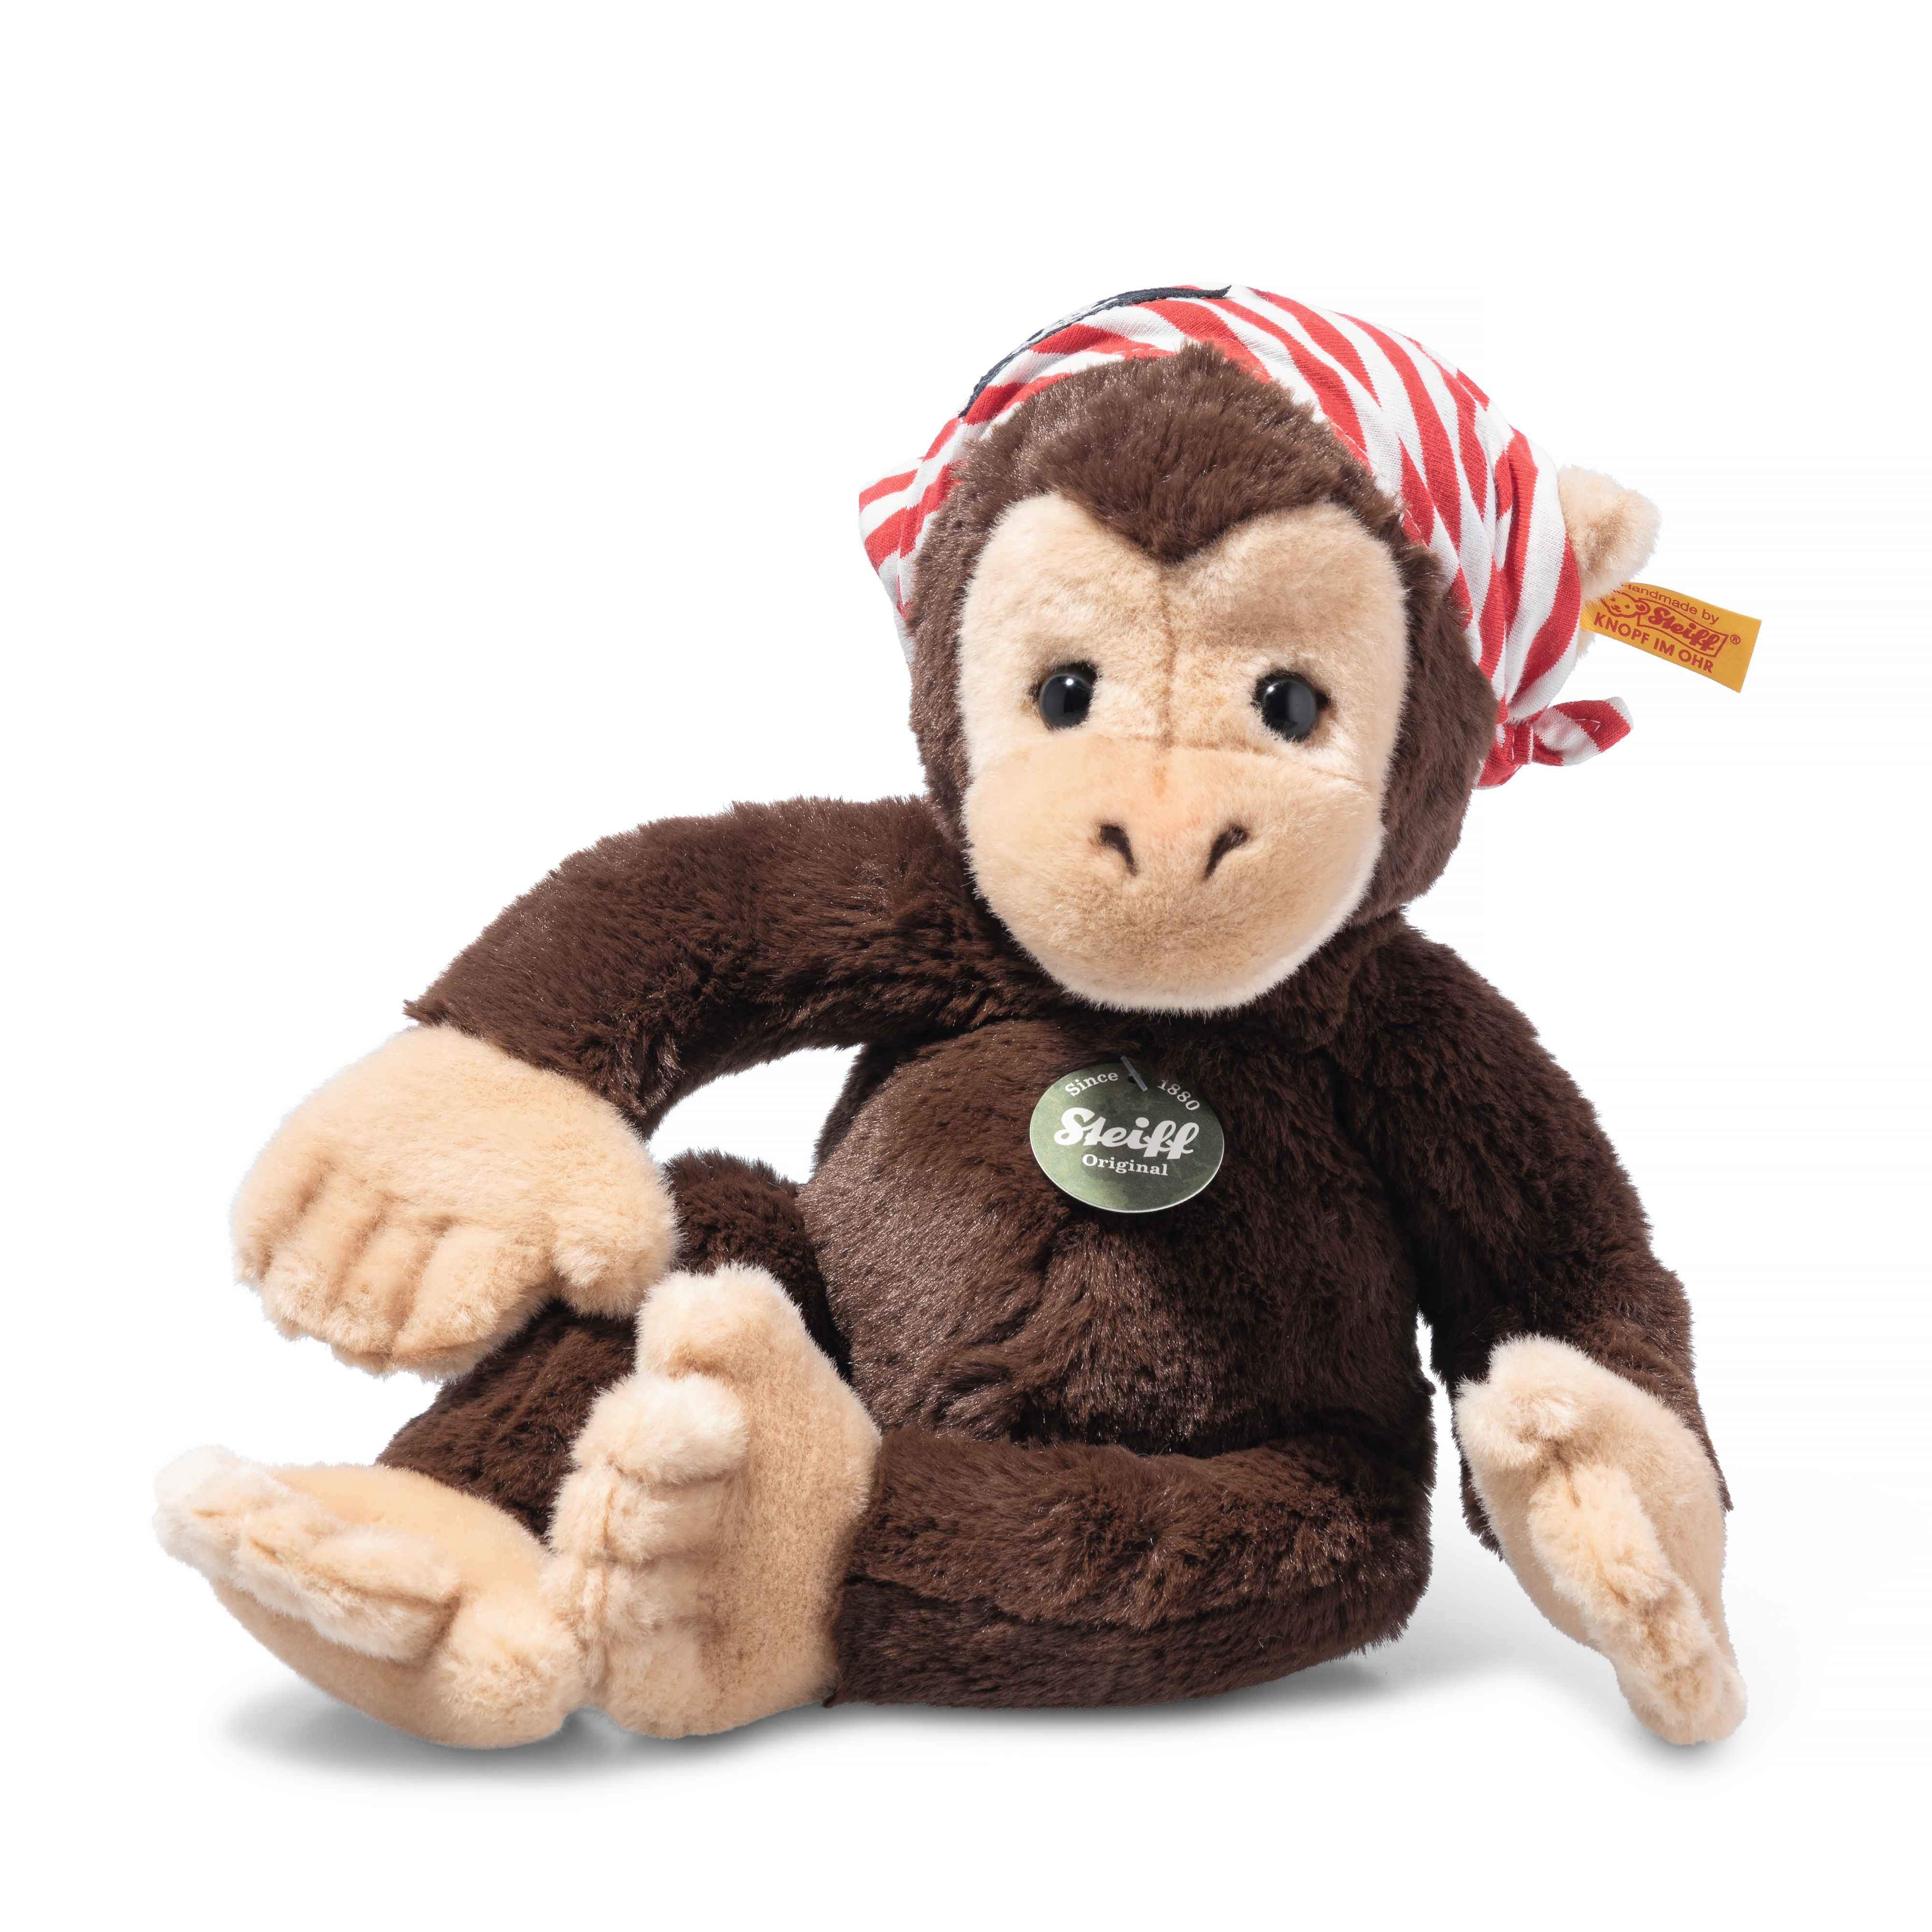 Steiff wճ}: Scotty Monkey Teddies for tomorrow